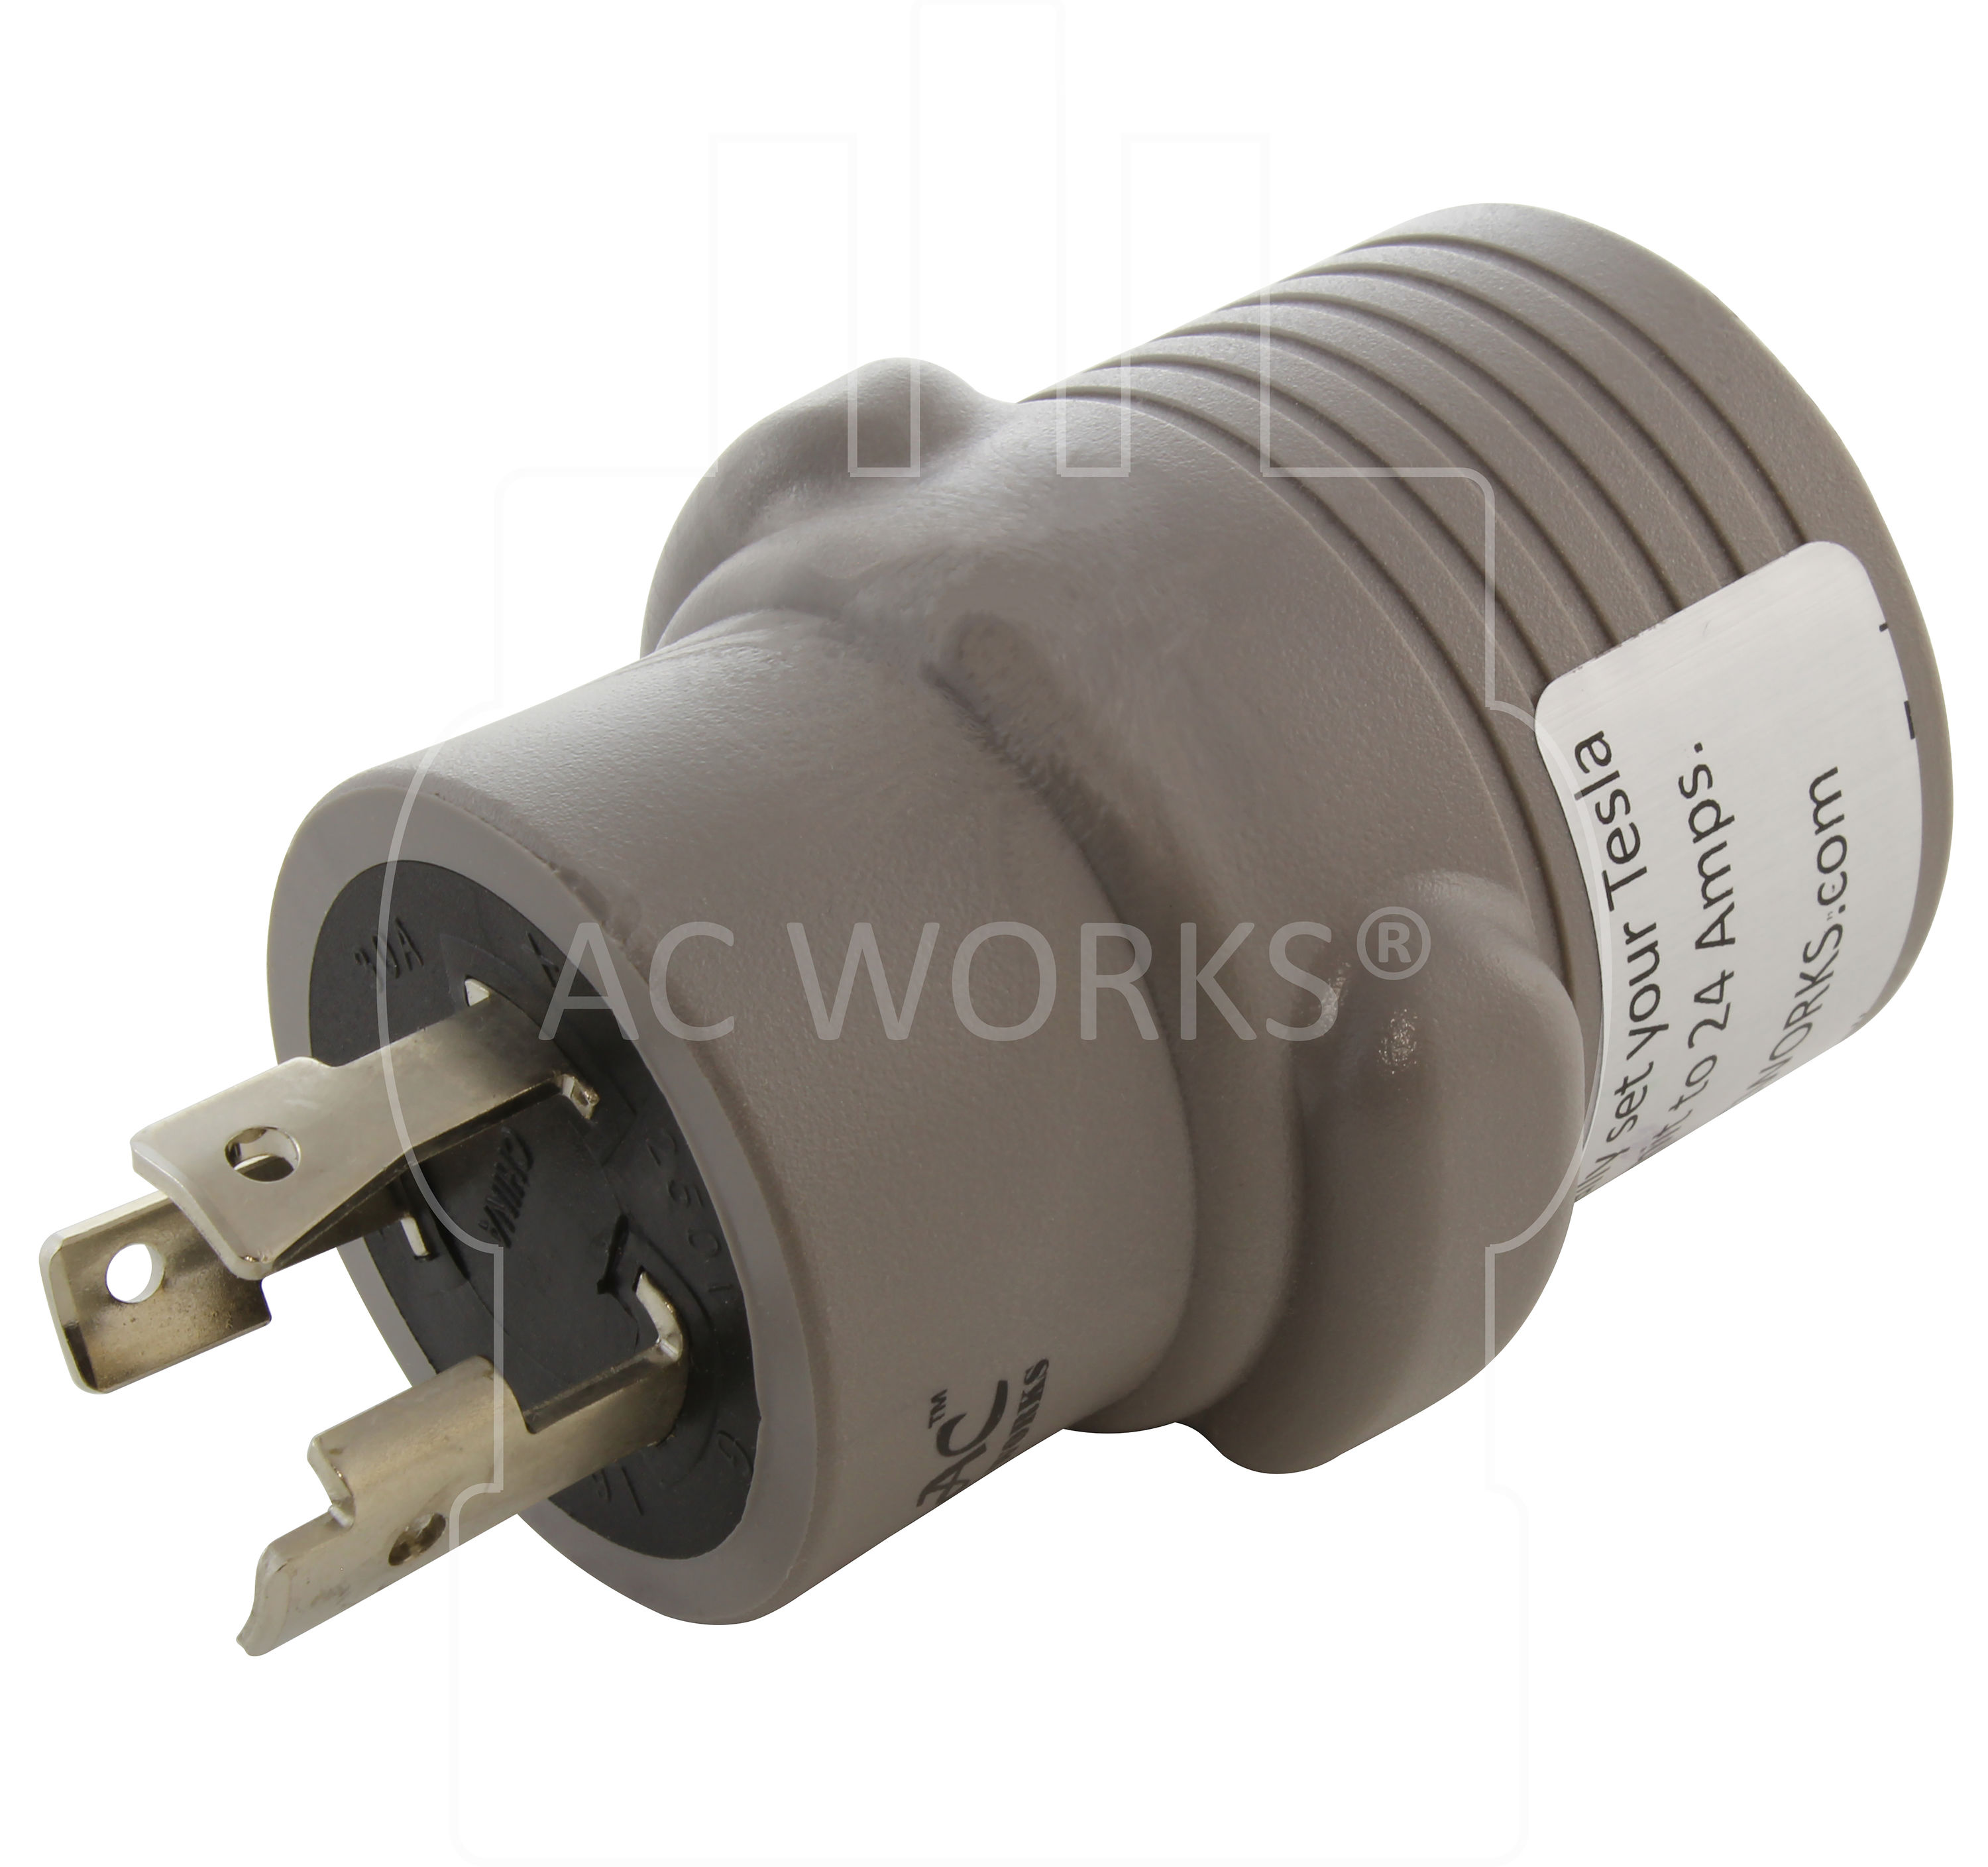 AC Works EV Charging Adapter for Tesla Use (L6-30 30A 250V 3-Prong to Tesla- Straight)